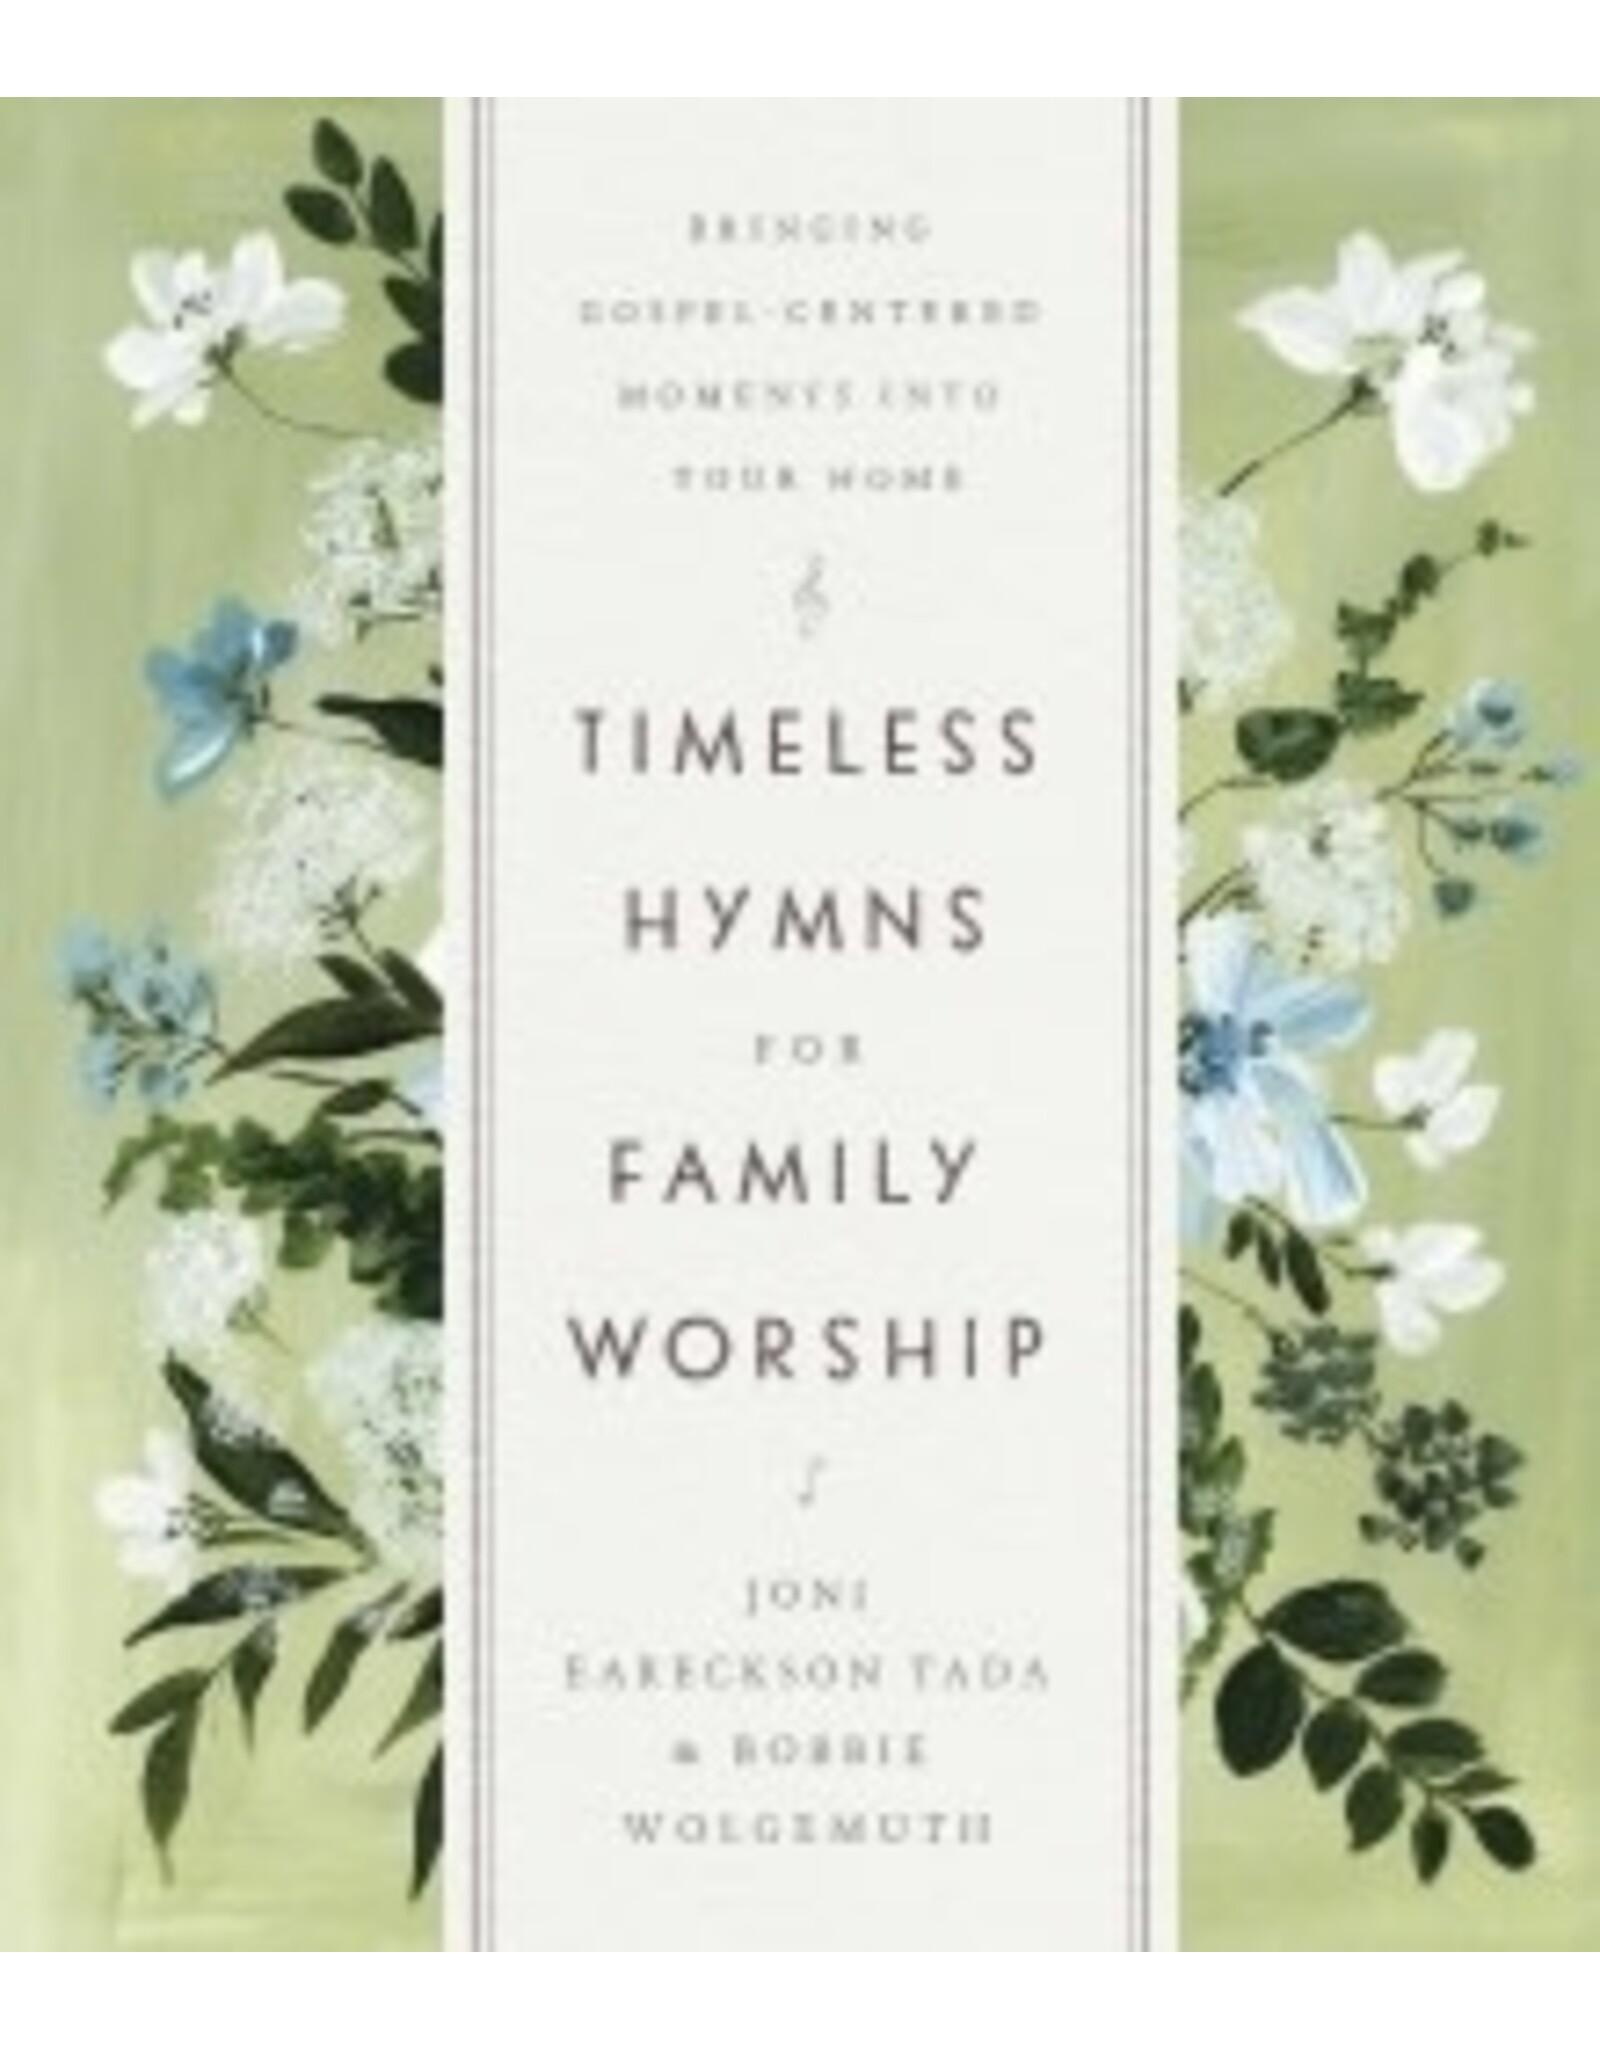 Joni Eareckson Tada, Bobbie Wolgemuth Timeless Hymns for Family Worship